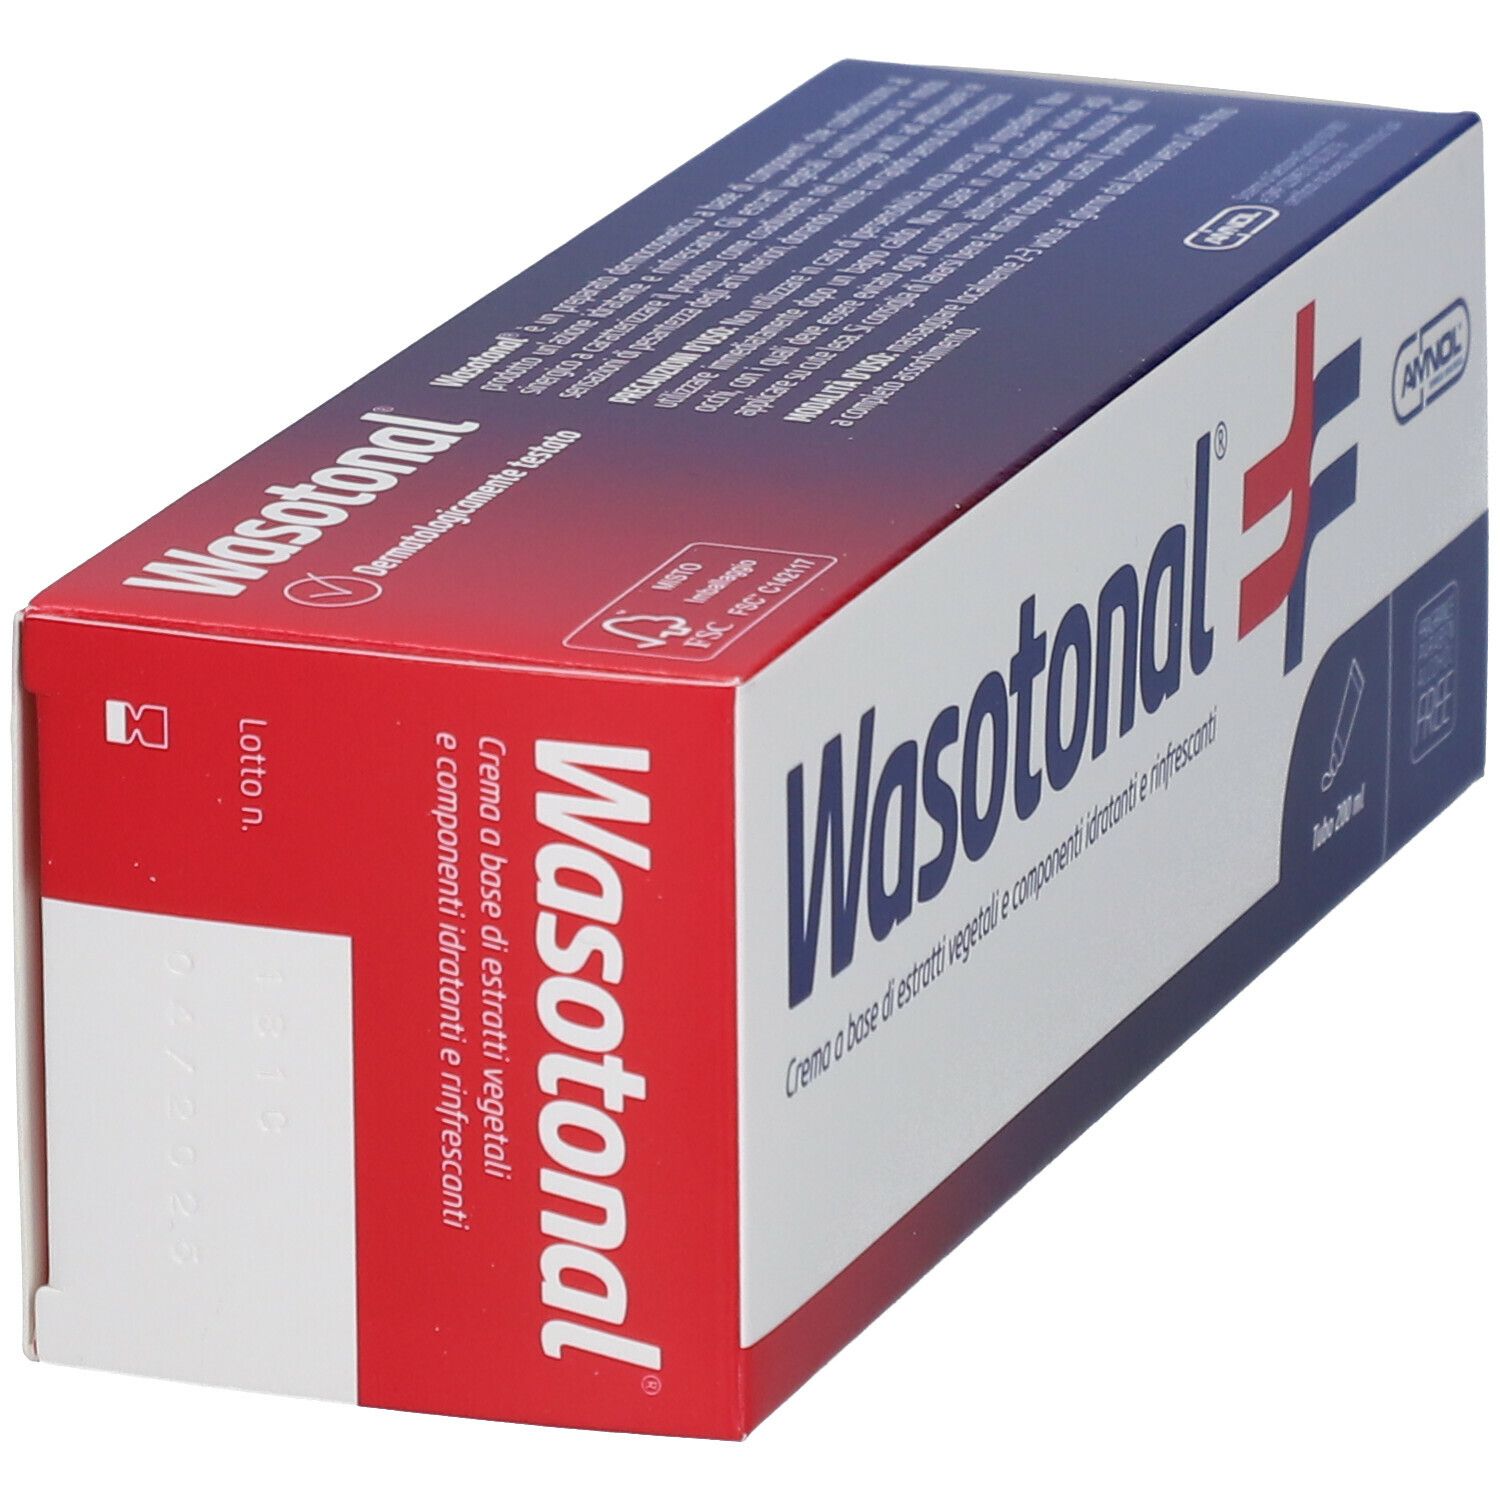 Wasotonal® Crema idratante